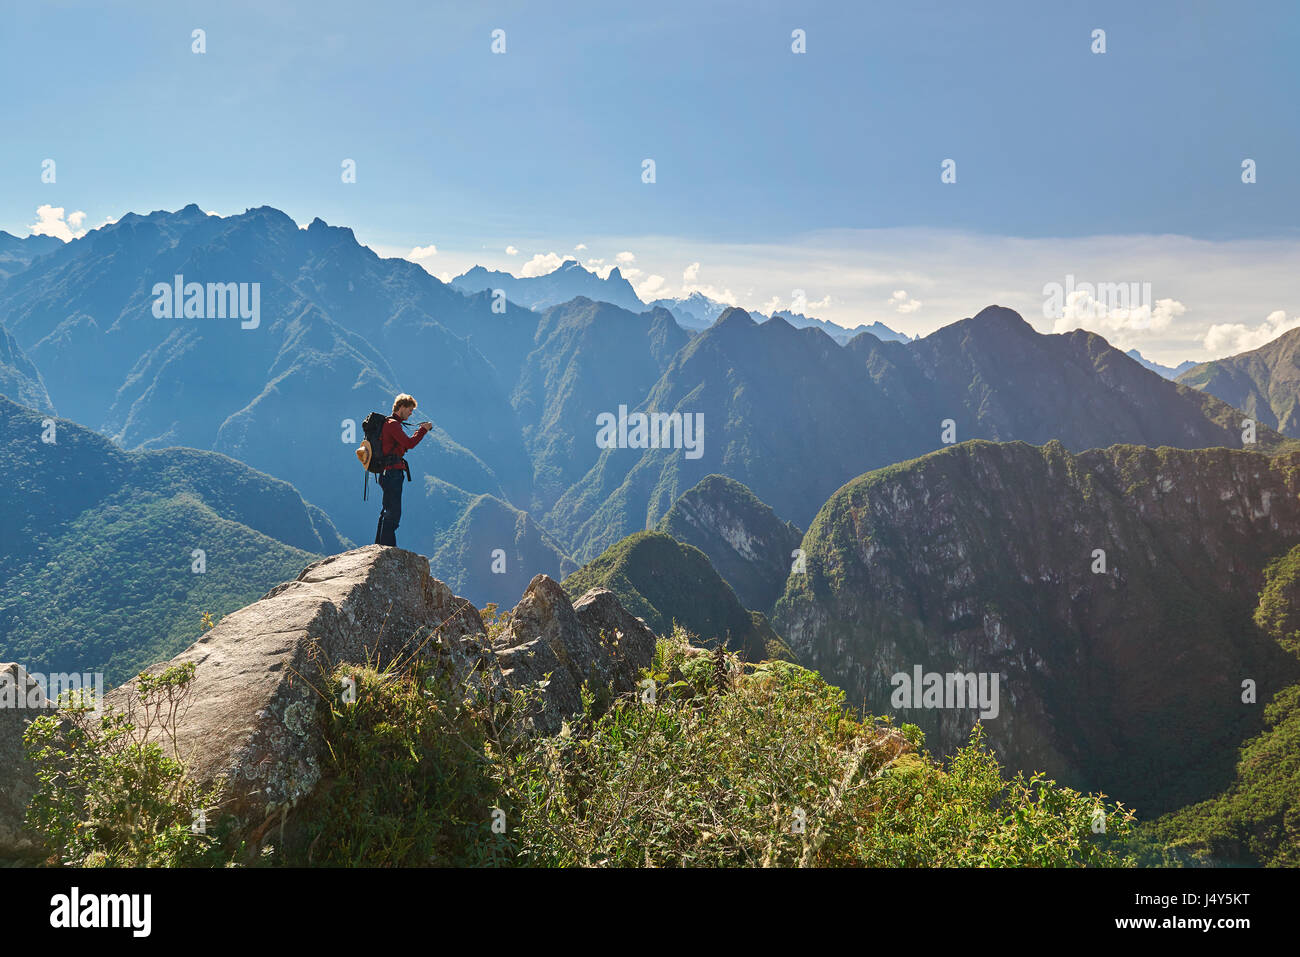 Machu Picchu, Peru - 22. April 2017. Mann mit Kamera am Gipfel des Berges. Ein Mann in Berge Gipfel wandern Stockfoto